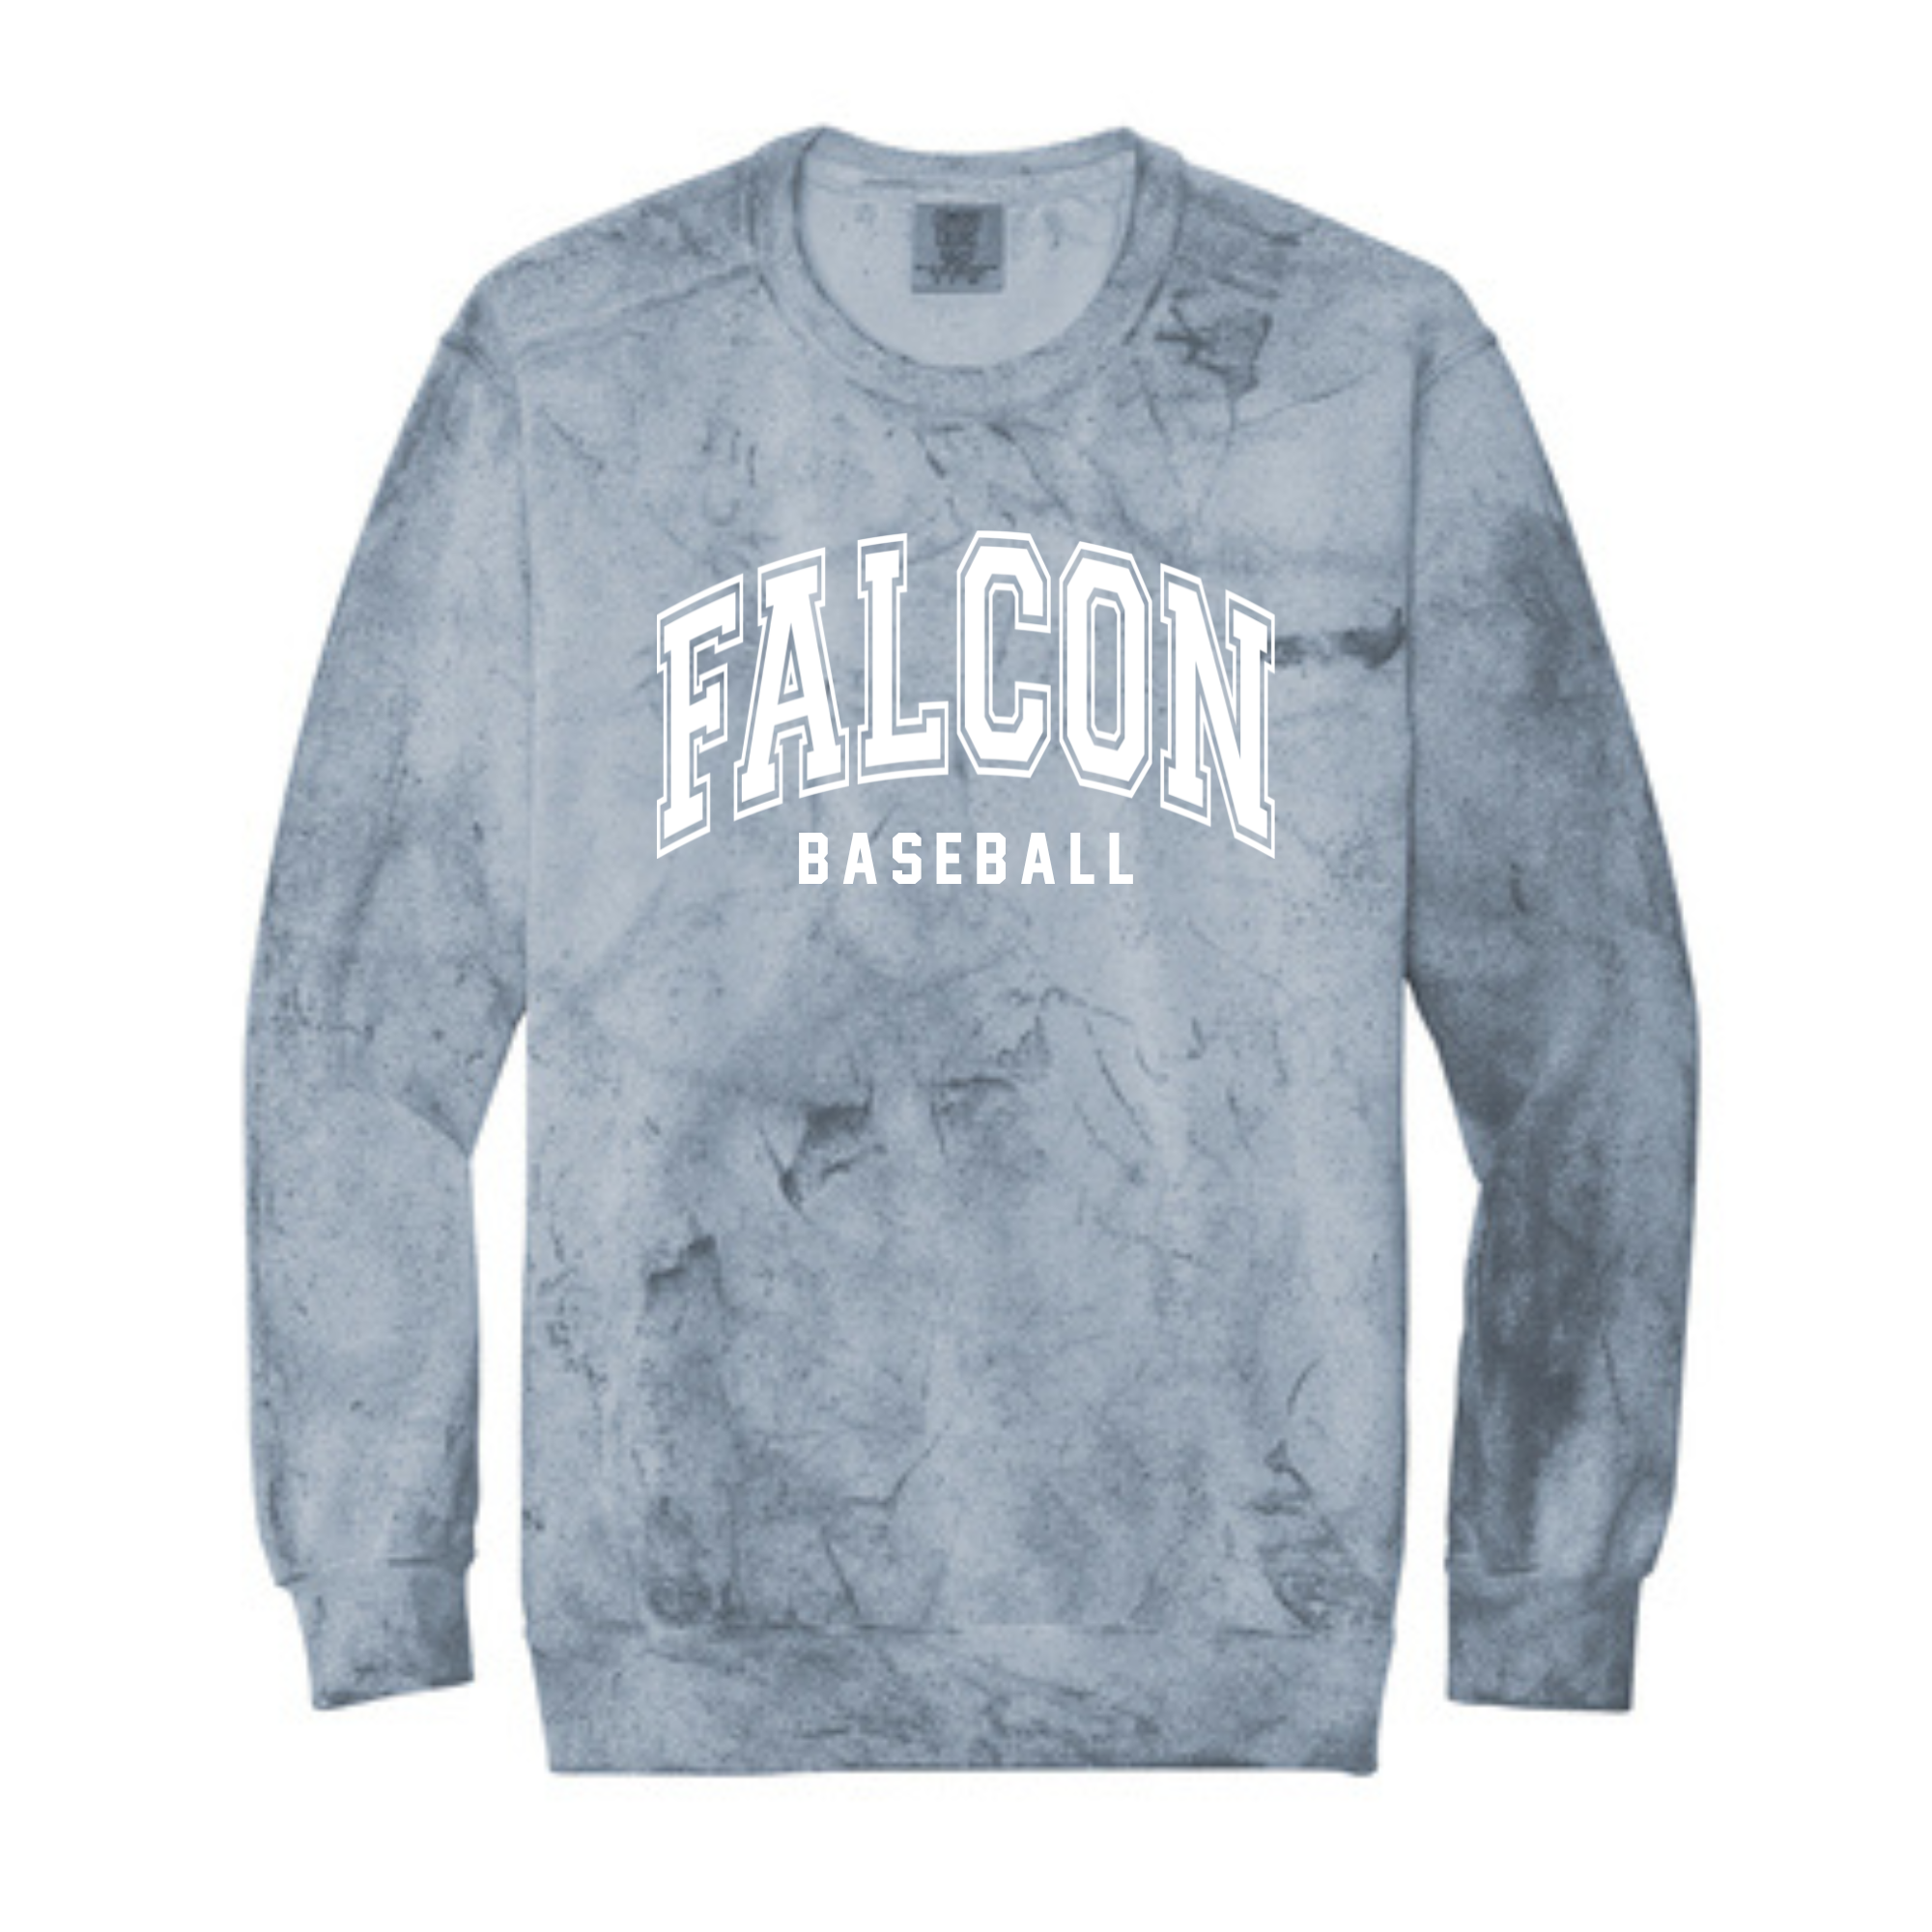 Falcon Baseball Comfort Colors Sweatshirt- 1545 Ocean